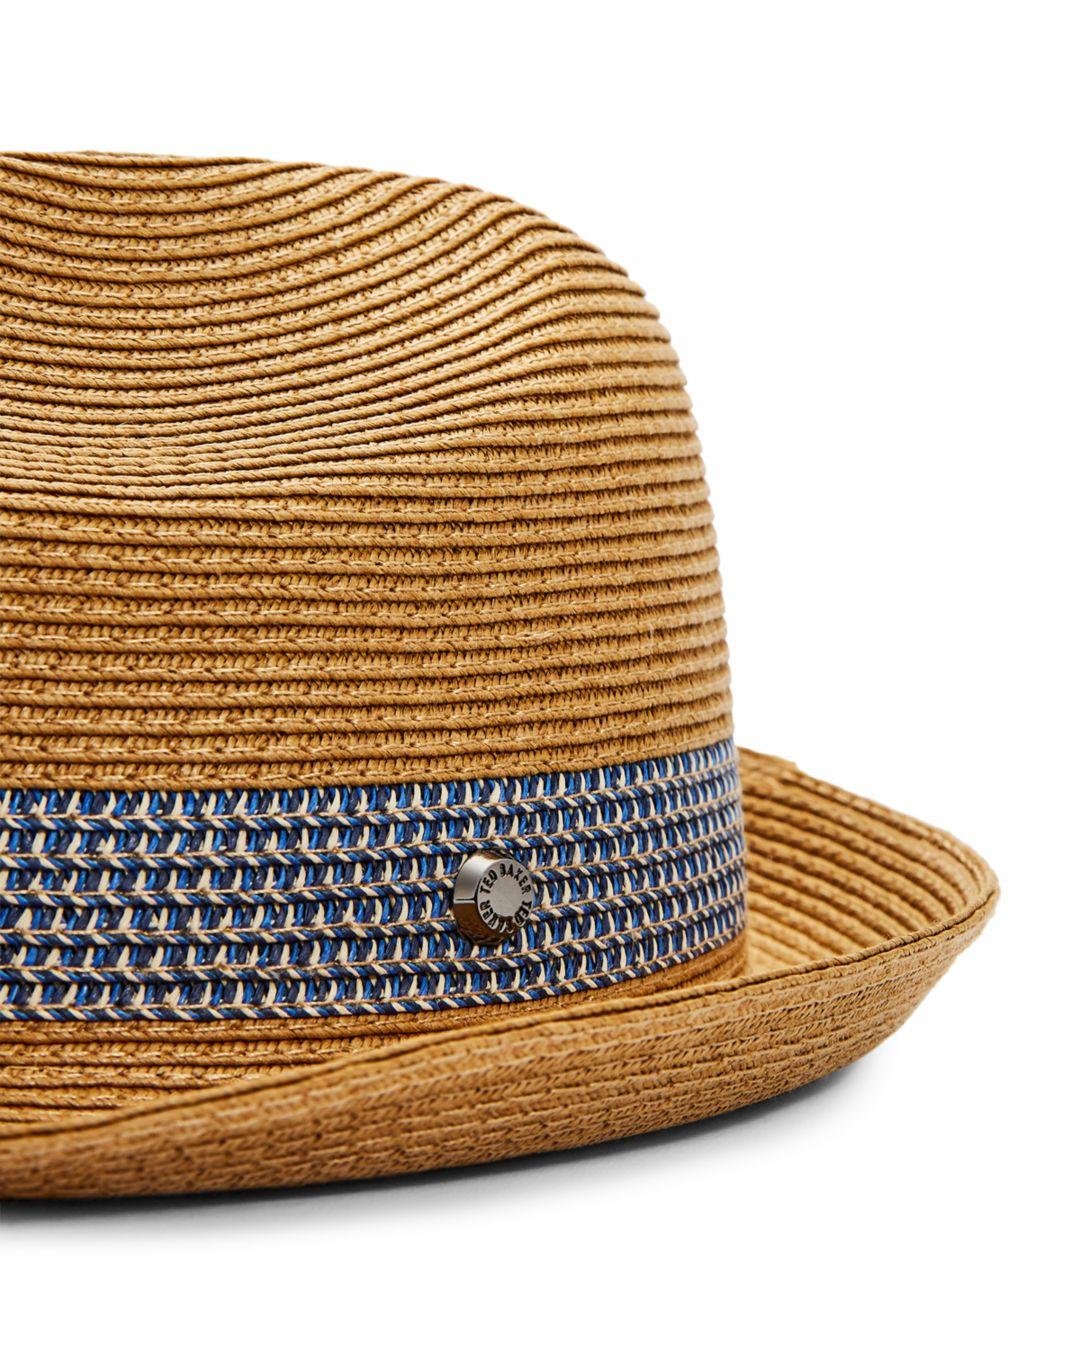 Ted Baker Denim Straw Trilby Hat in Beige (Natural) for Men - Lyst